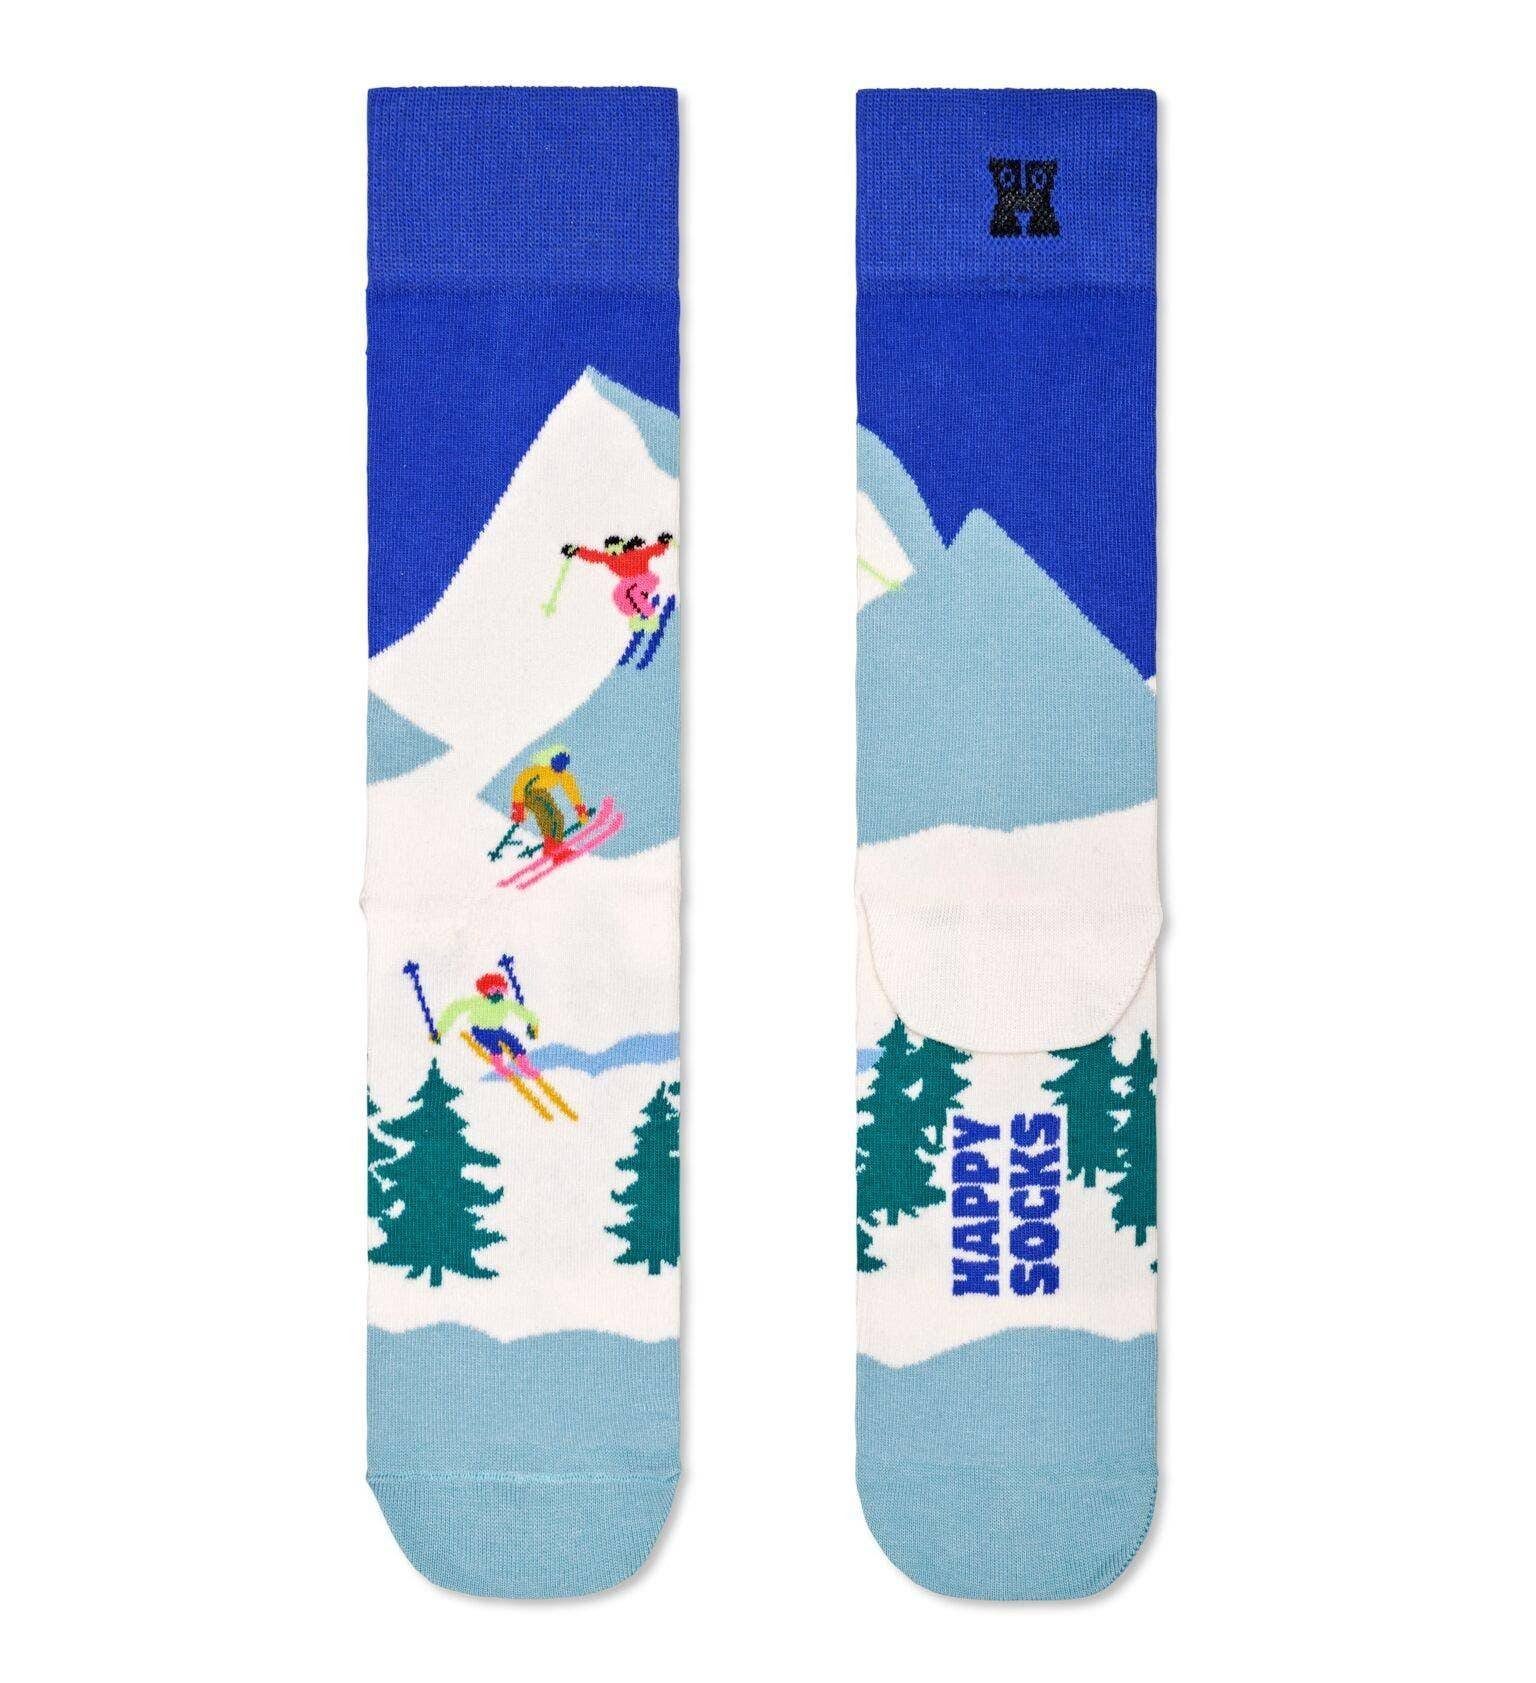 Socken Skiing Freizeitsocken Socks Downhill Happy